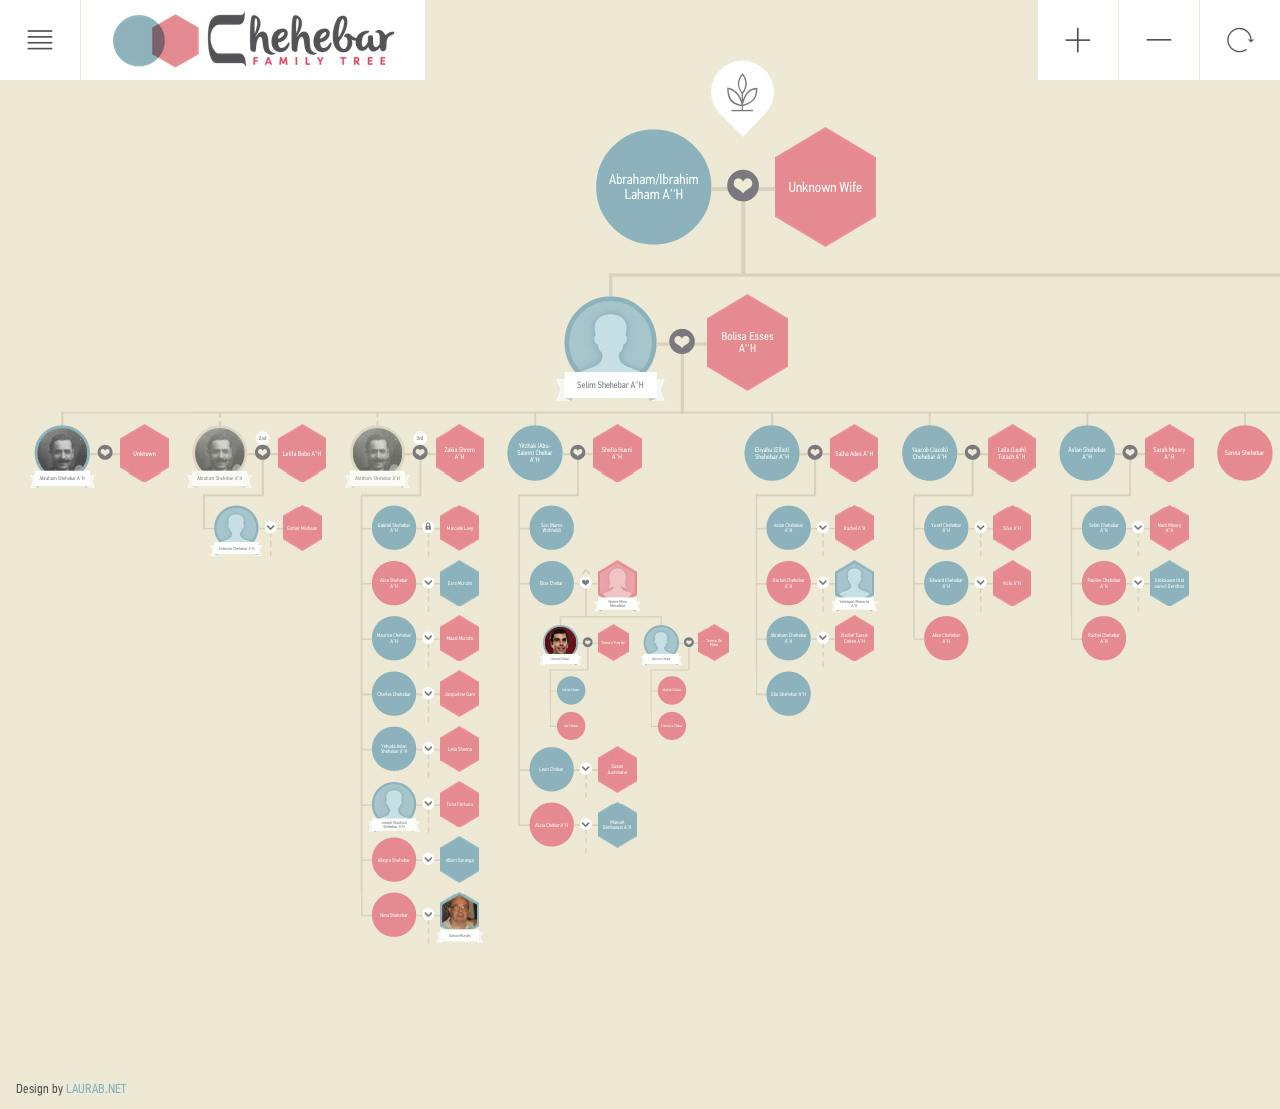 Chehebar Family Tree Website Screenshot